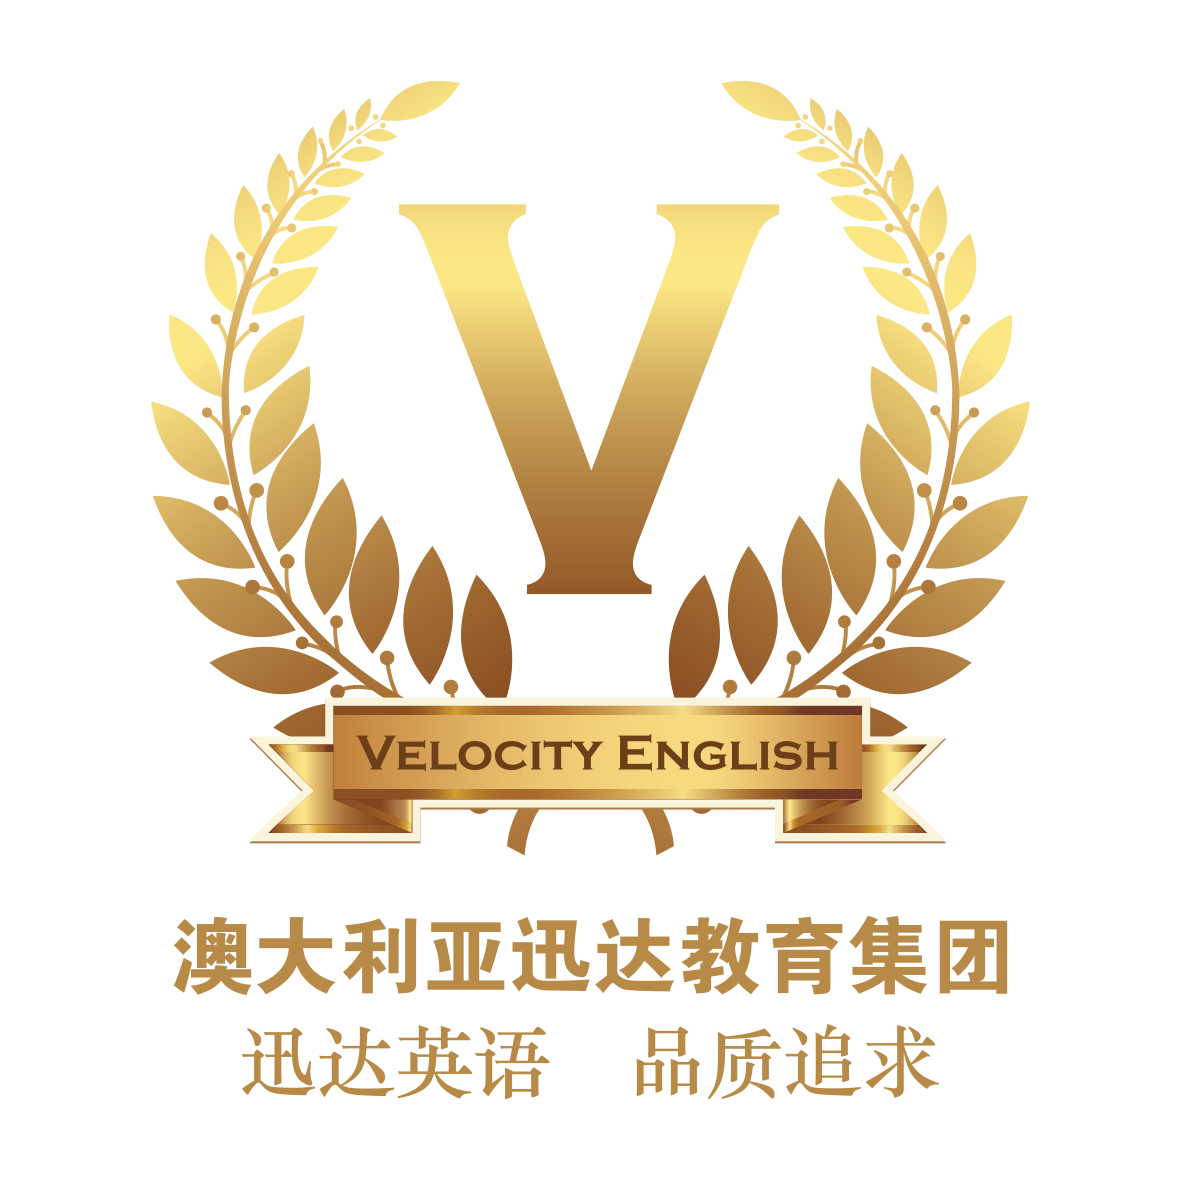 Velocity English